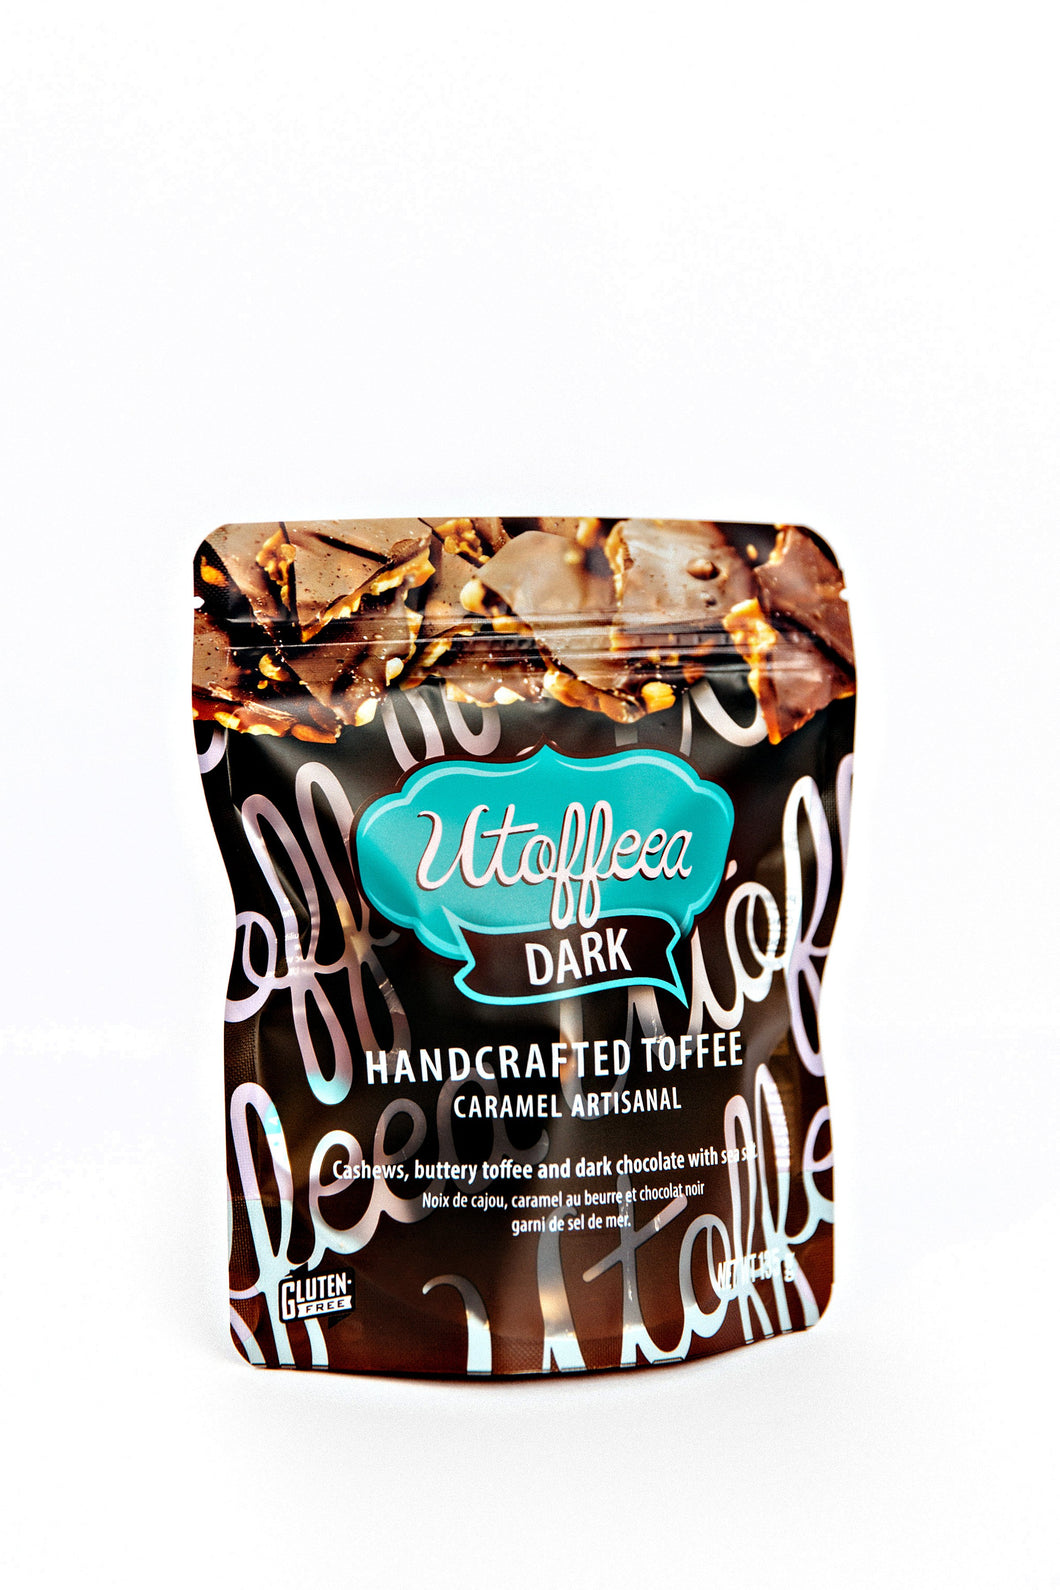 Utoffeea Dark Toffee Handcrafted Artisanal Caramels